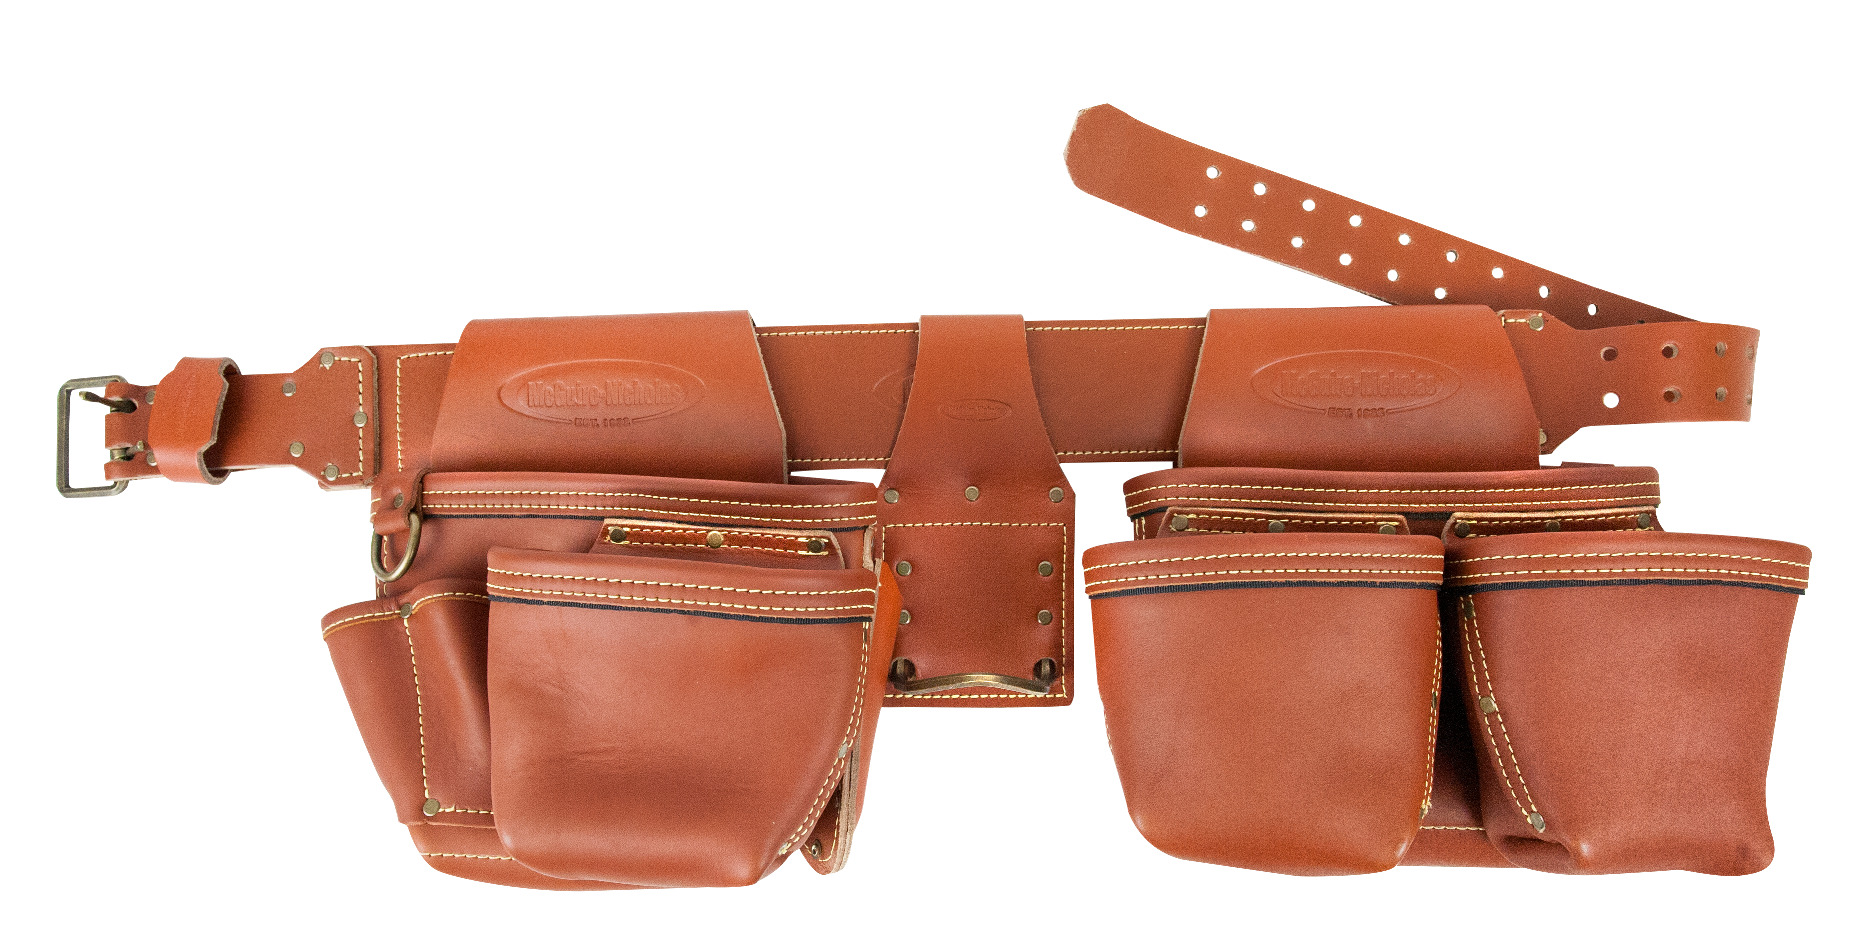 McGuire Nicholas Handyman Carpenter Leather Tool Bag Apron w/ Belt Brown Suede 